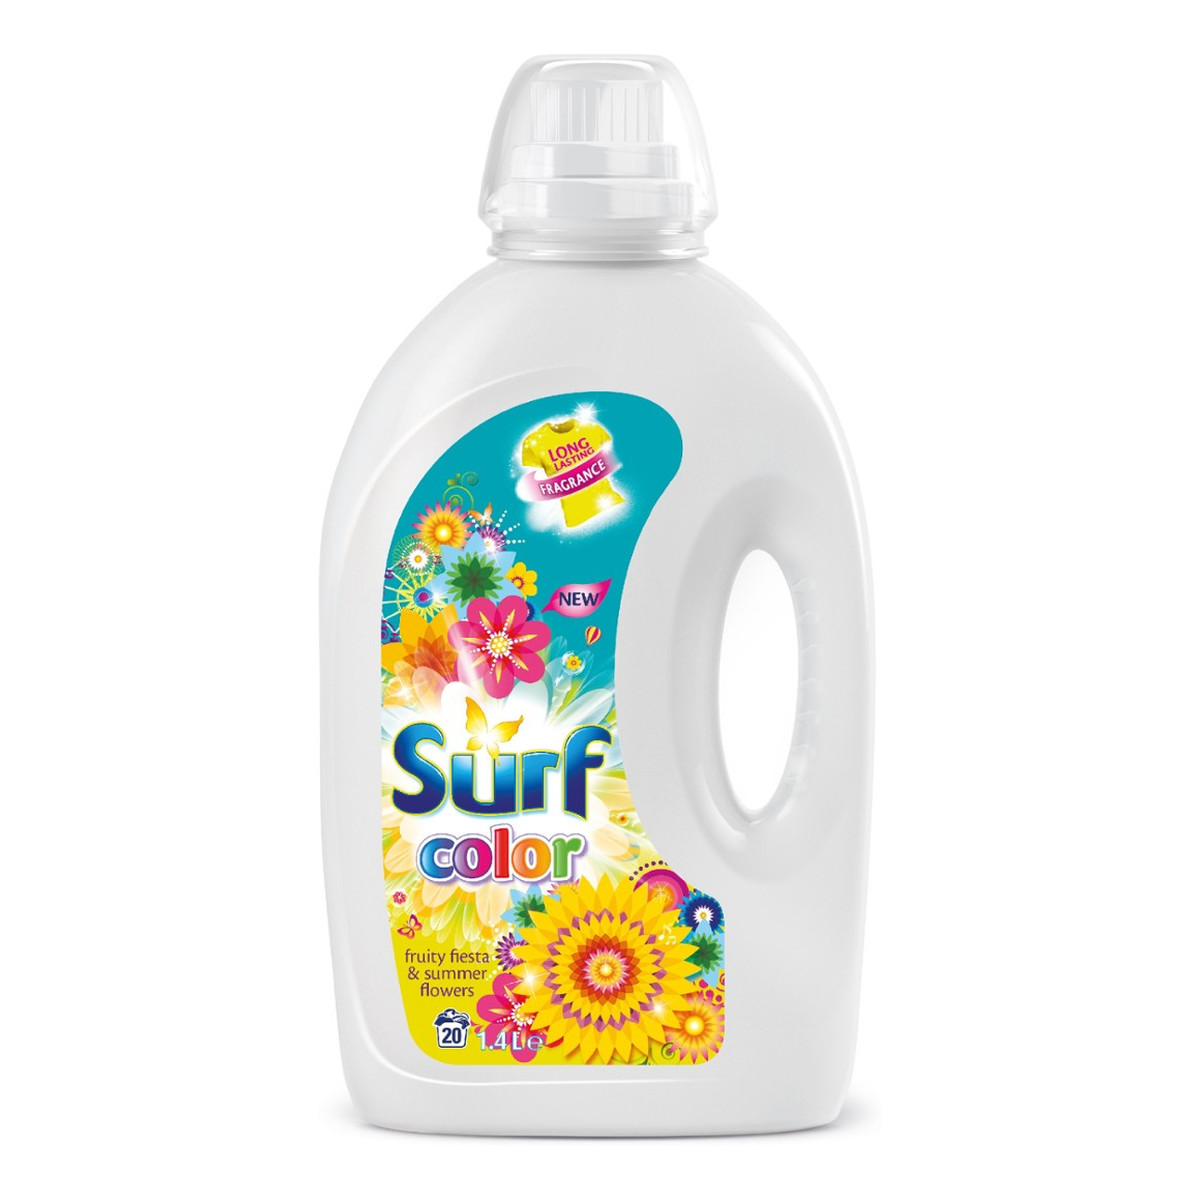 Surf Color Fruity Fiesta&Summer Flowers Płyn do prania (20 prań) 1400ml